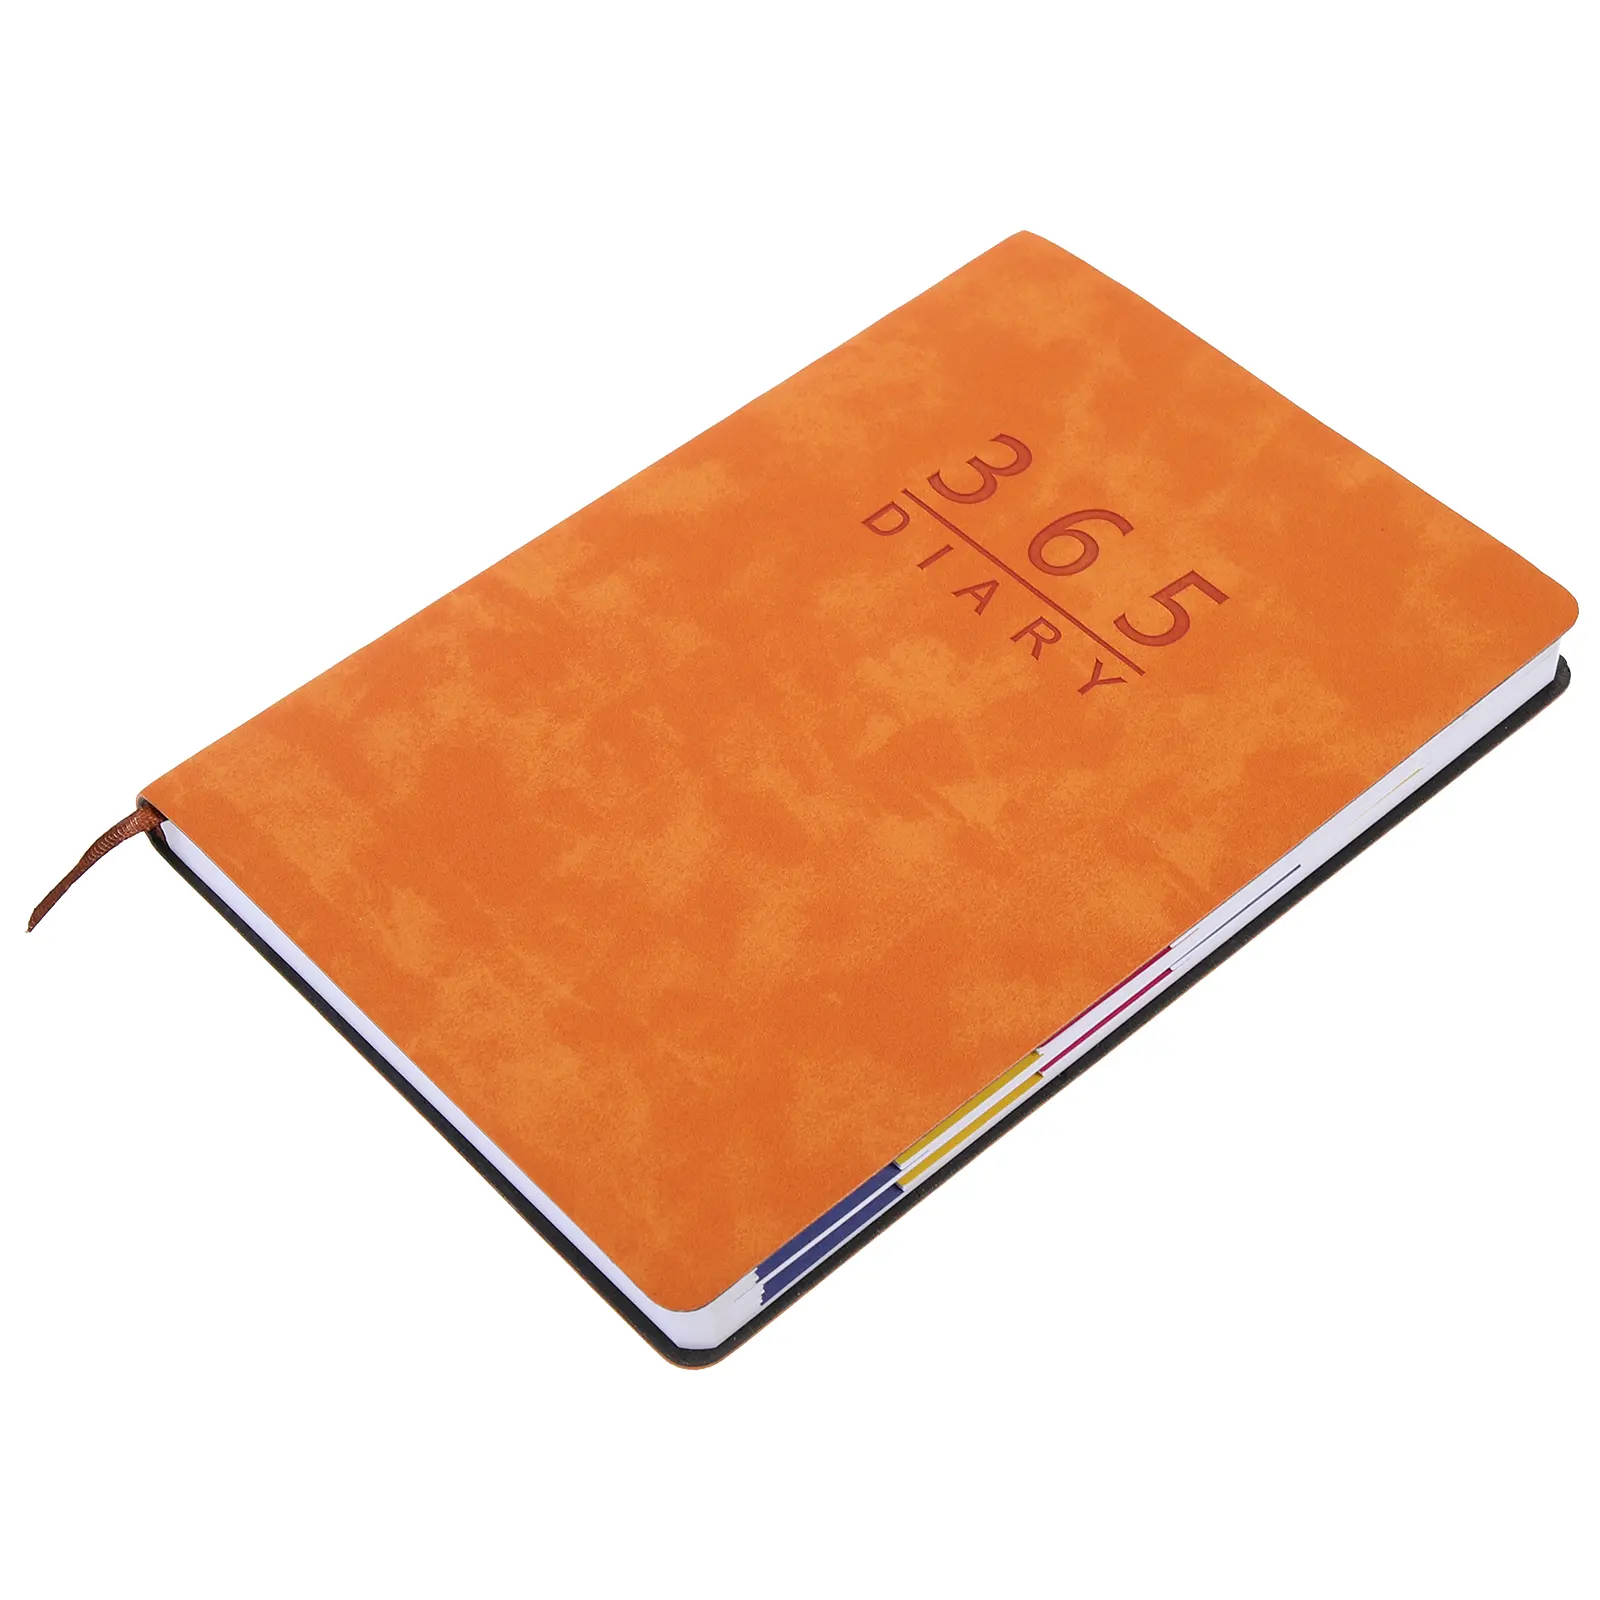 कारमेल डे डिजाइनर आयोजक प्रीमियम हार्डकवर 365 दिन नोटबुक 2014 कैलेंडर के साथ अनुकूलित दैनिक योजनाकार